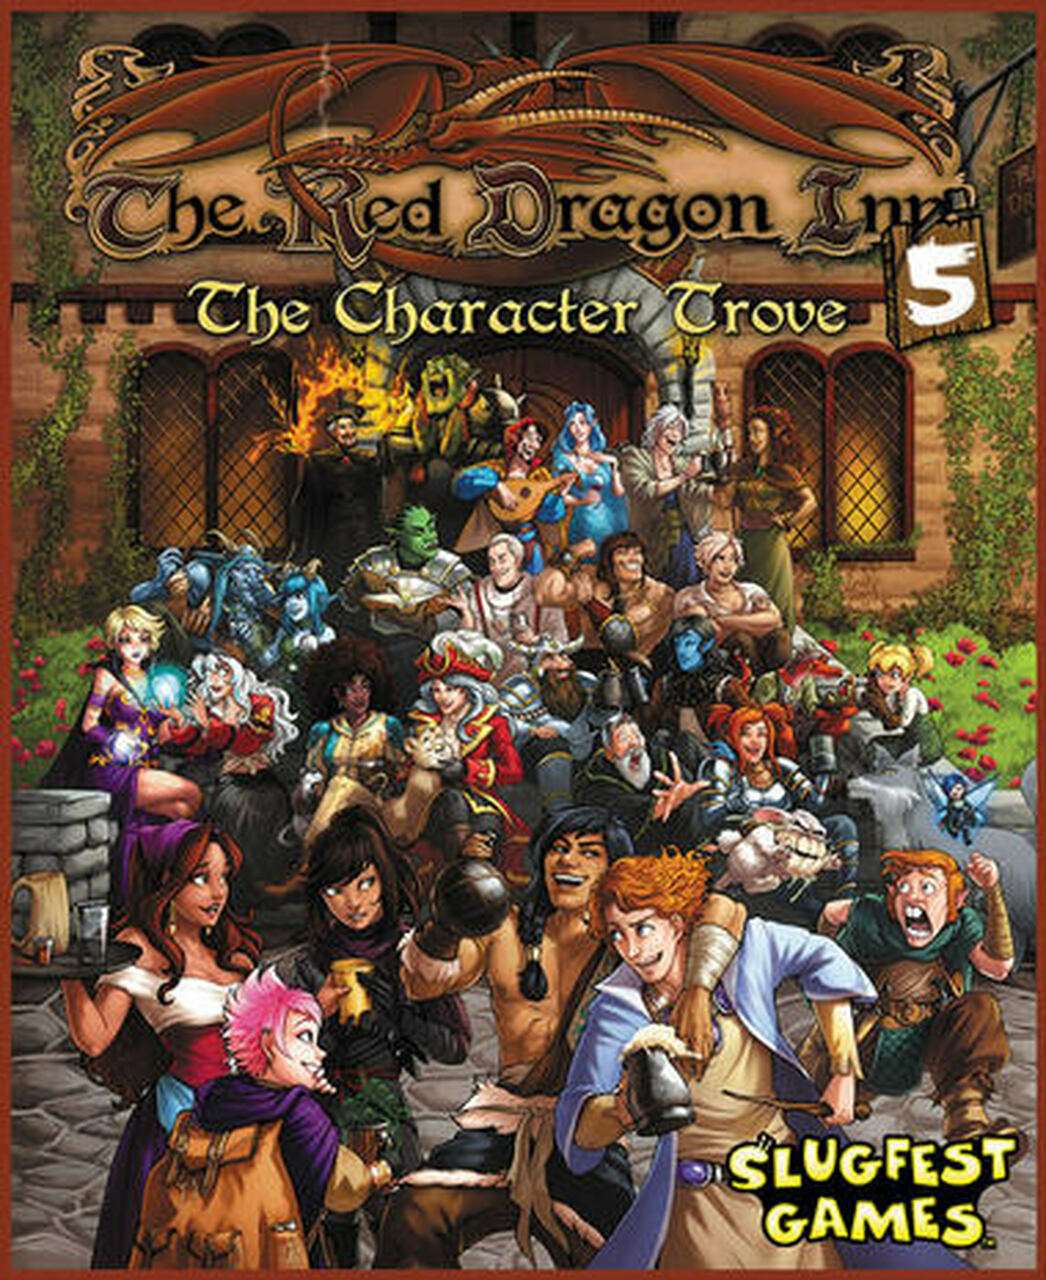 THE RED DRAGON INN 5: THE CHARACTER TROVE - Dark Ninja Gaming LA